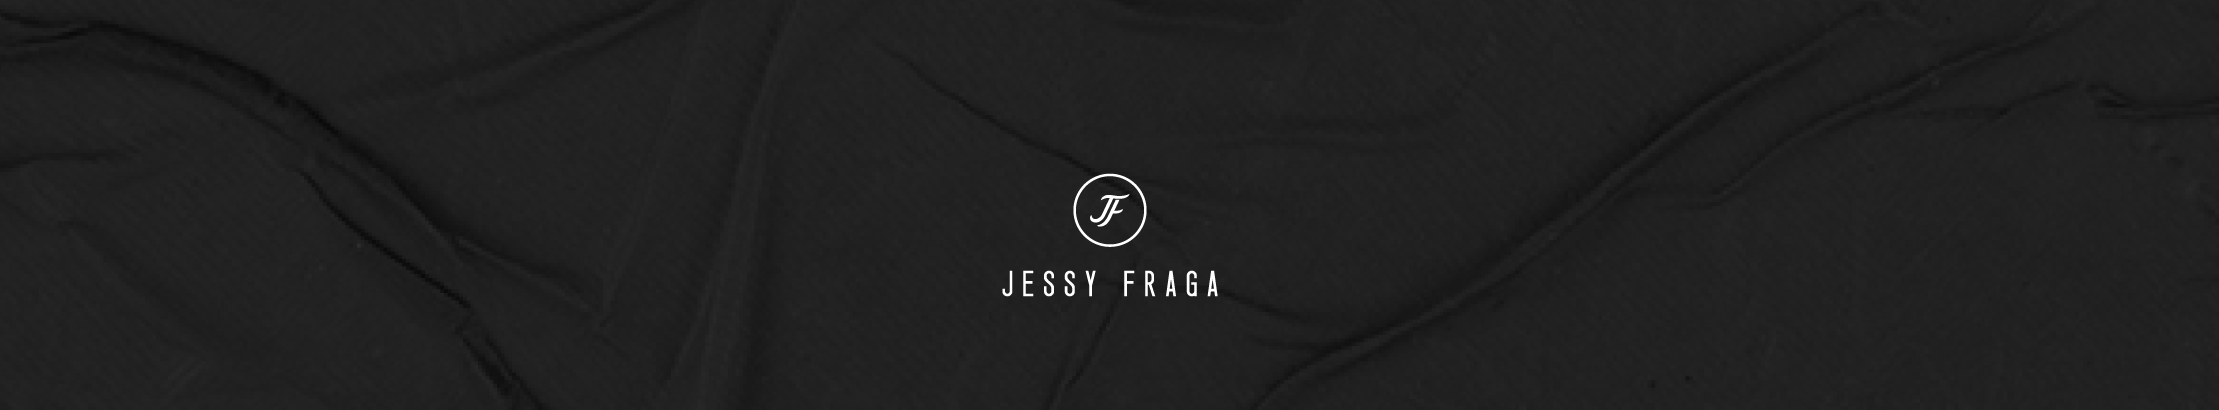 Profielbanner van Jessy Fraga